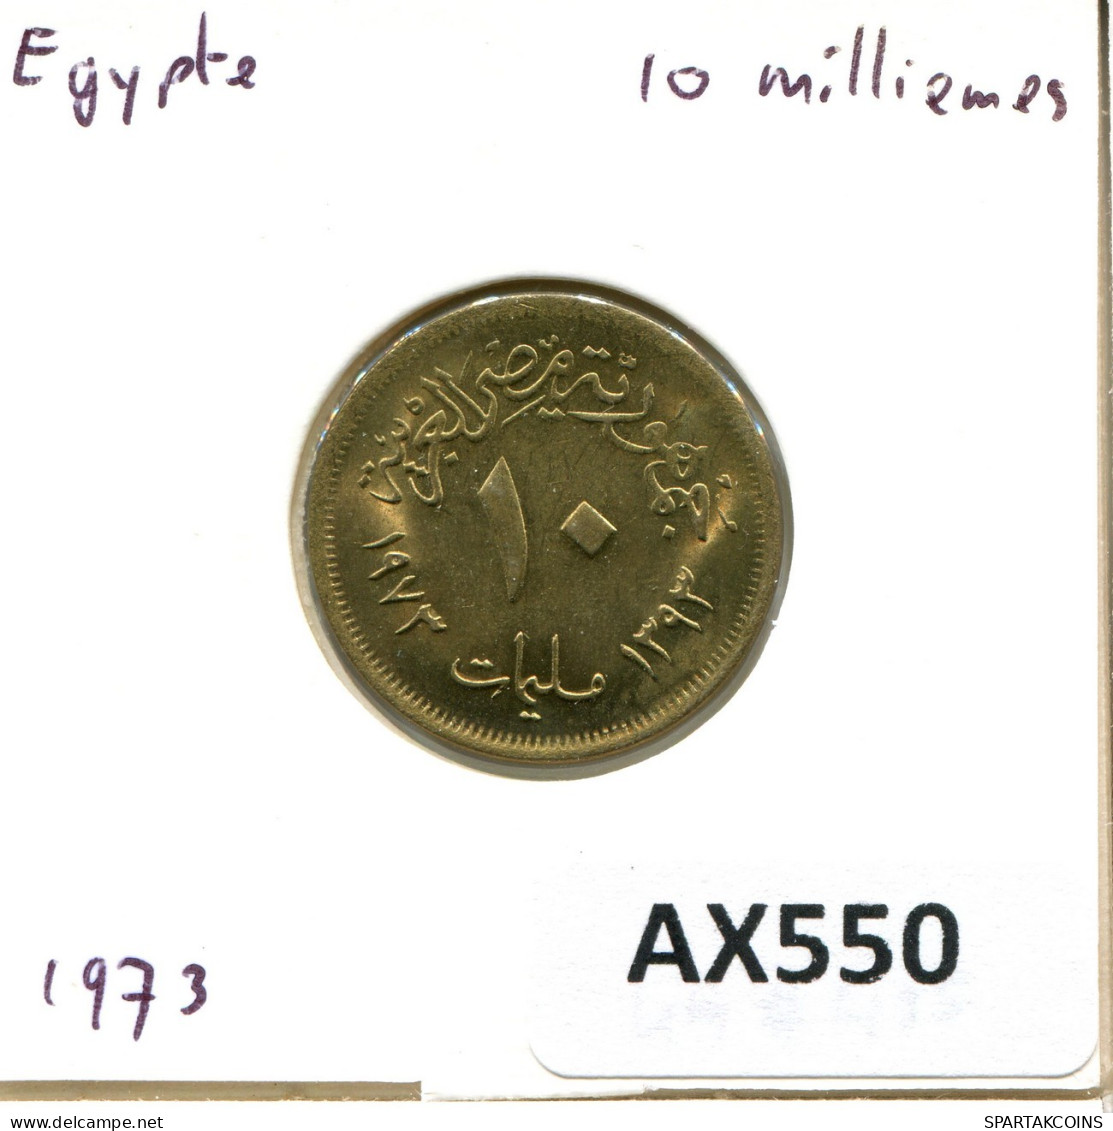 10 MILLIEMES 1973 ÄGYPTEN EGYPT Islamisch Münze #AX550.D.A - Egypte